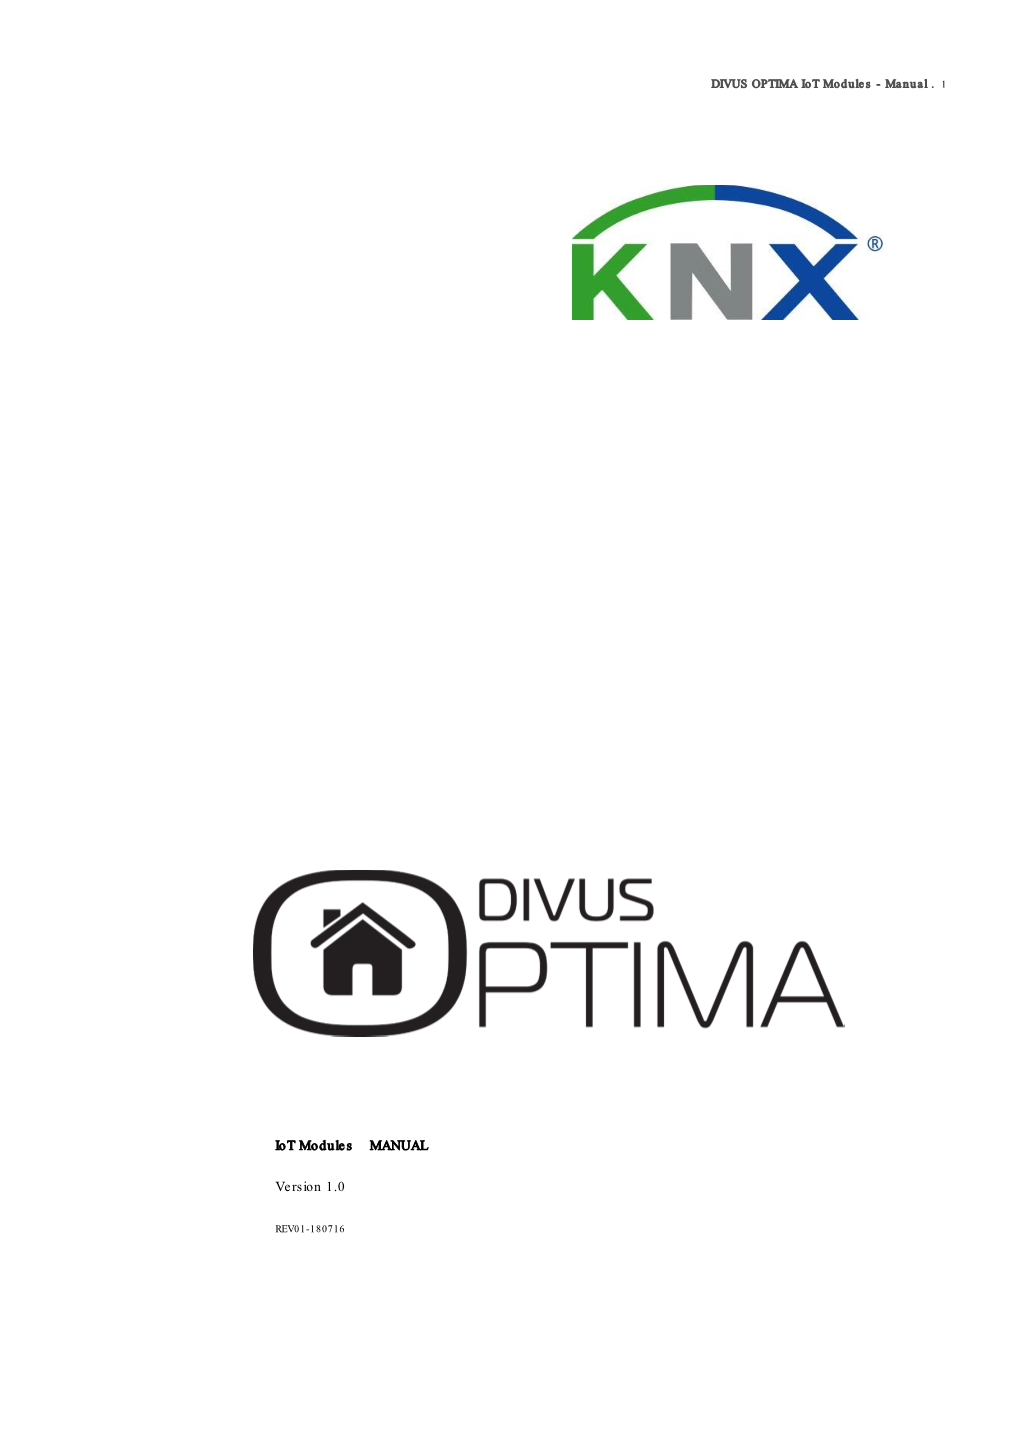 DIVUS OPTIMA Iot Modules Manual